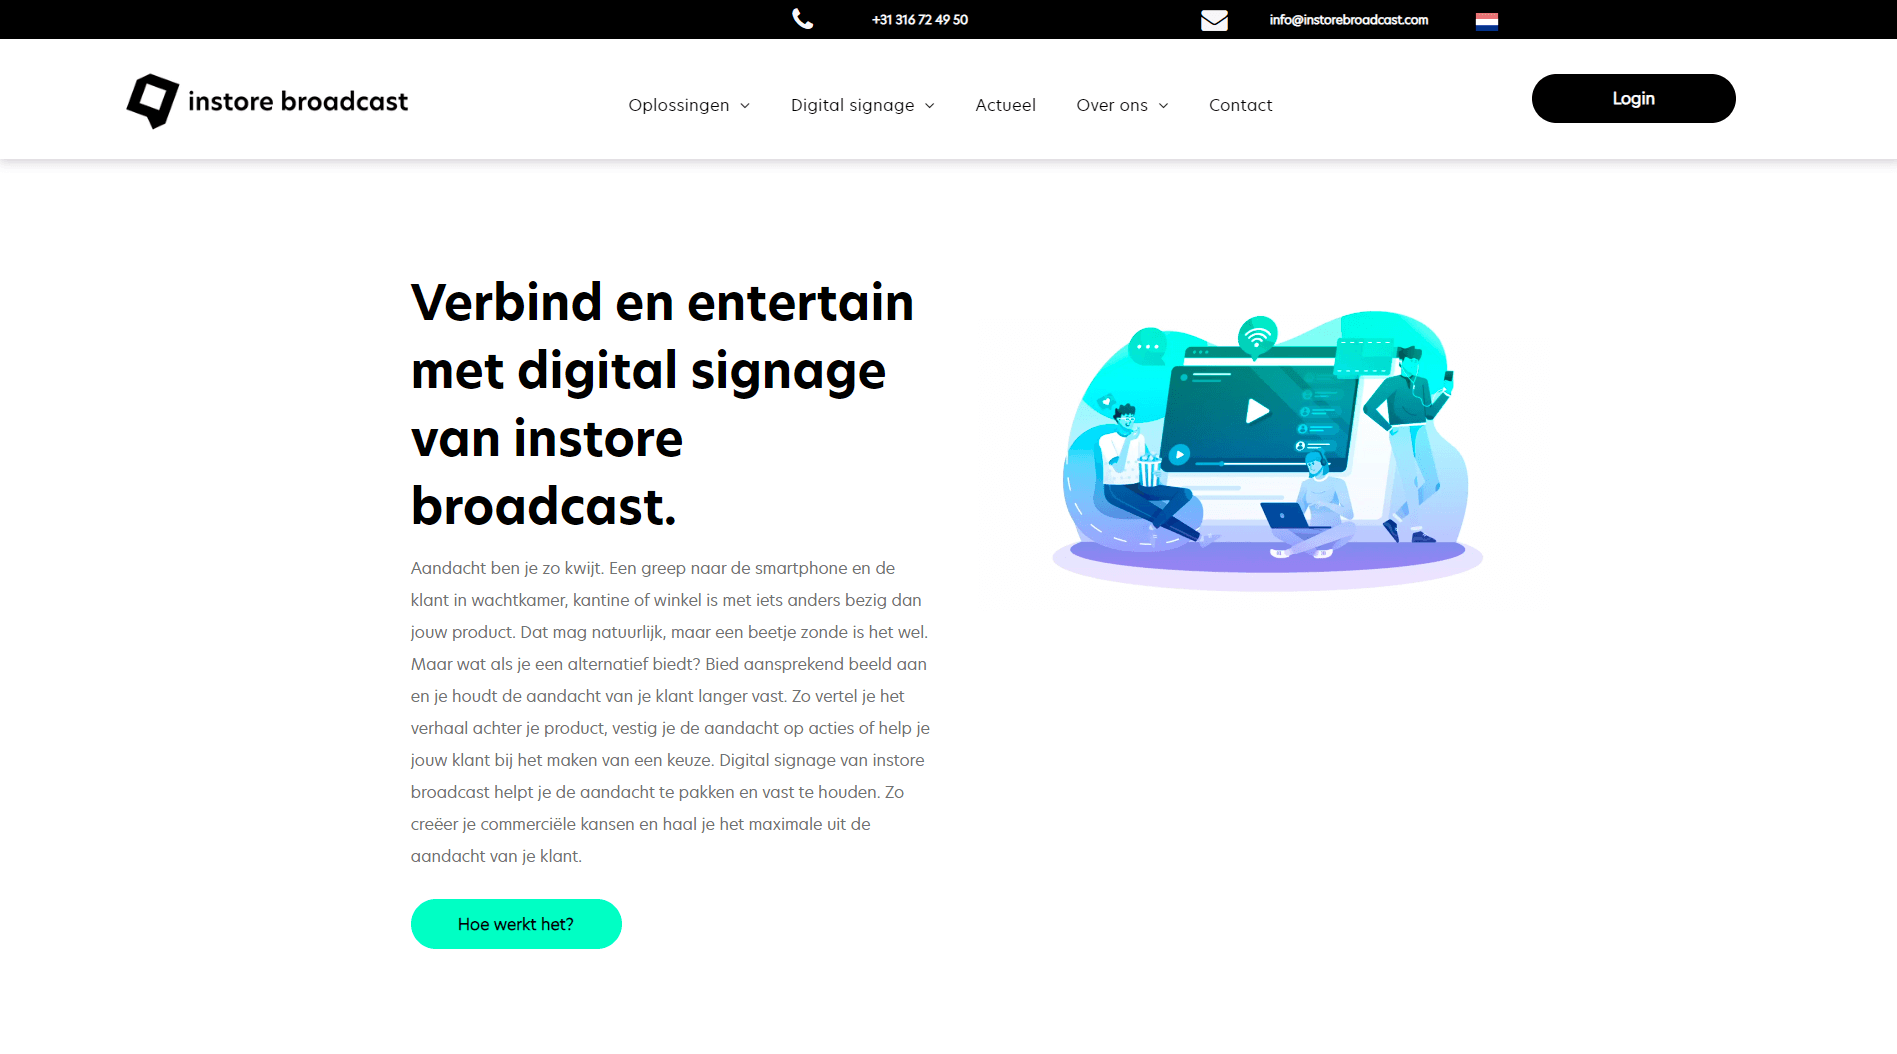 Website Instore broadcast